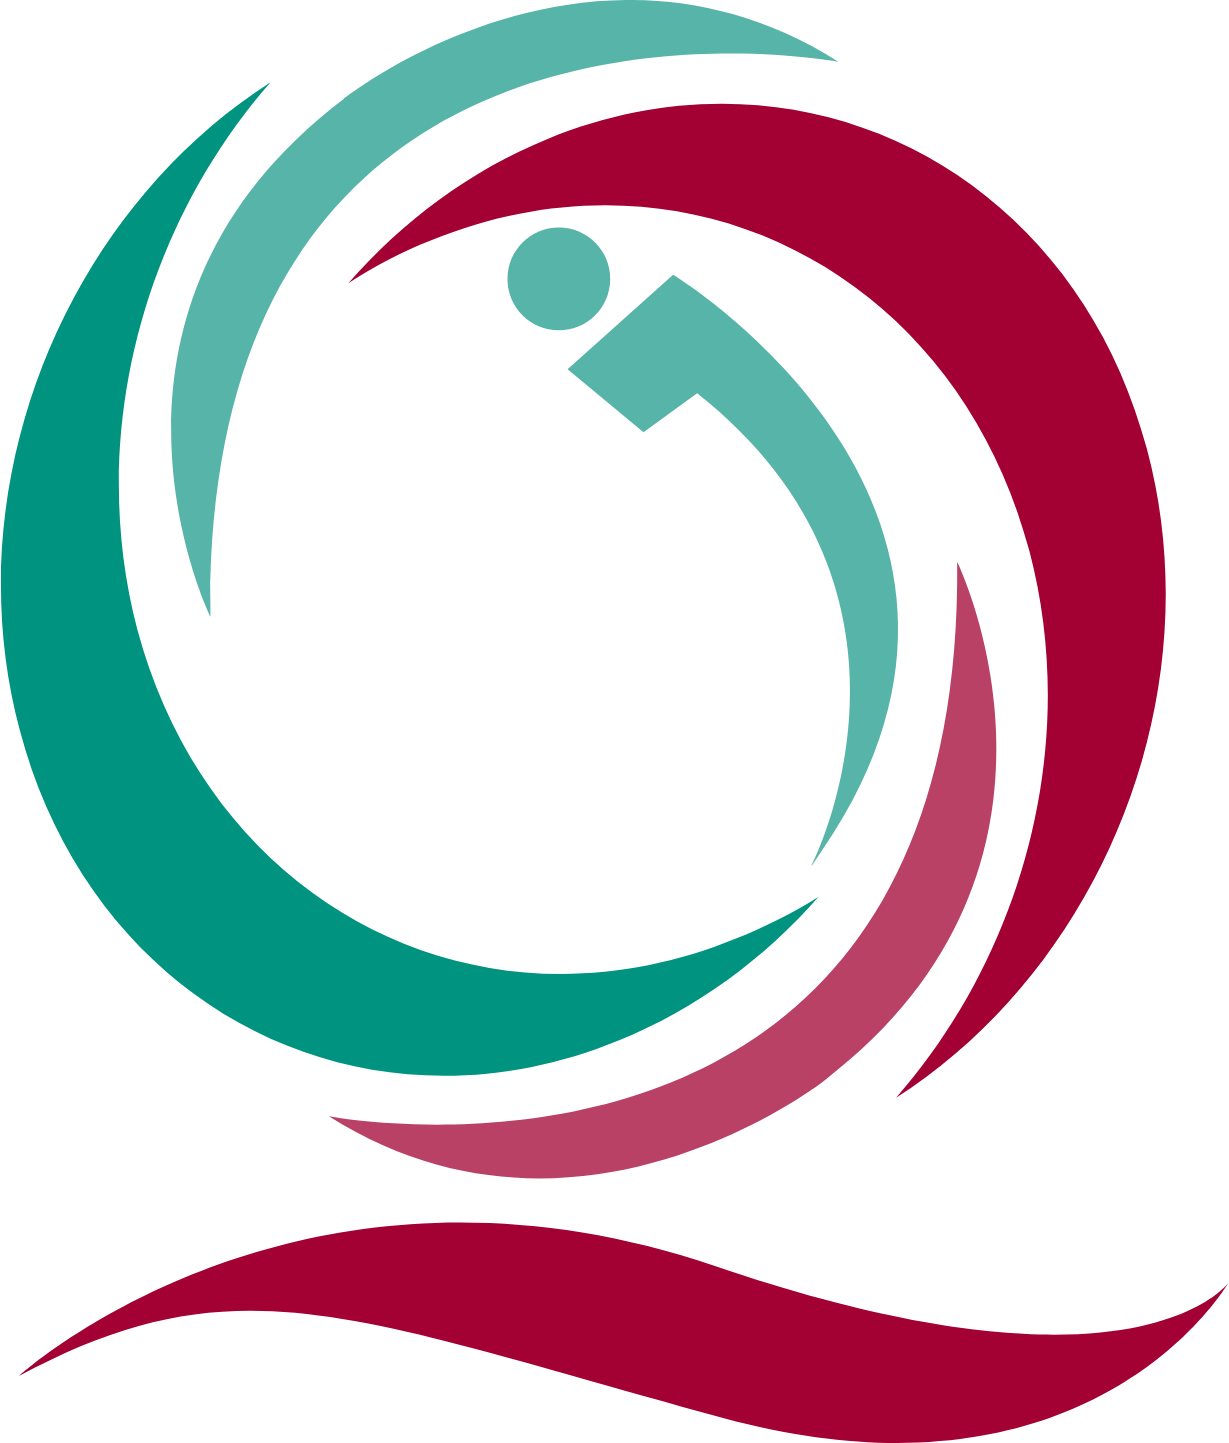 Qatar Oman Investment Company logo (transparent PNG)